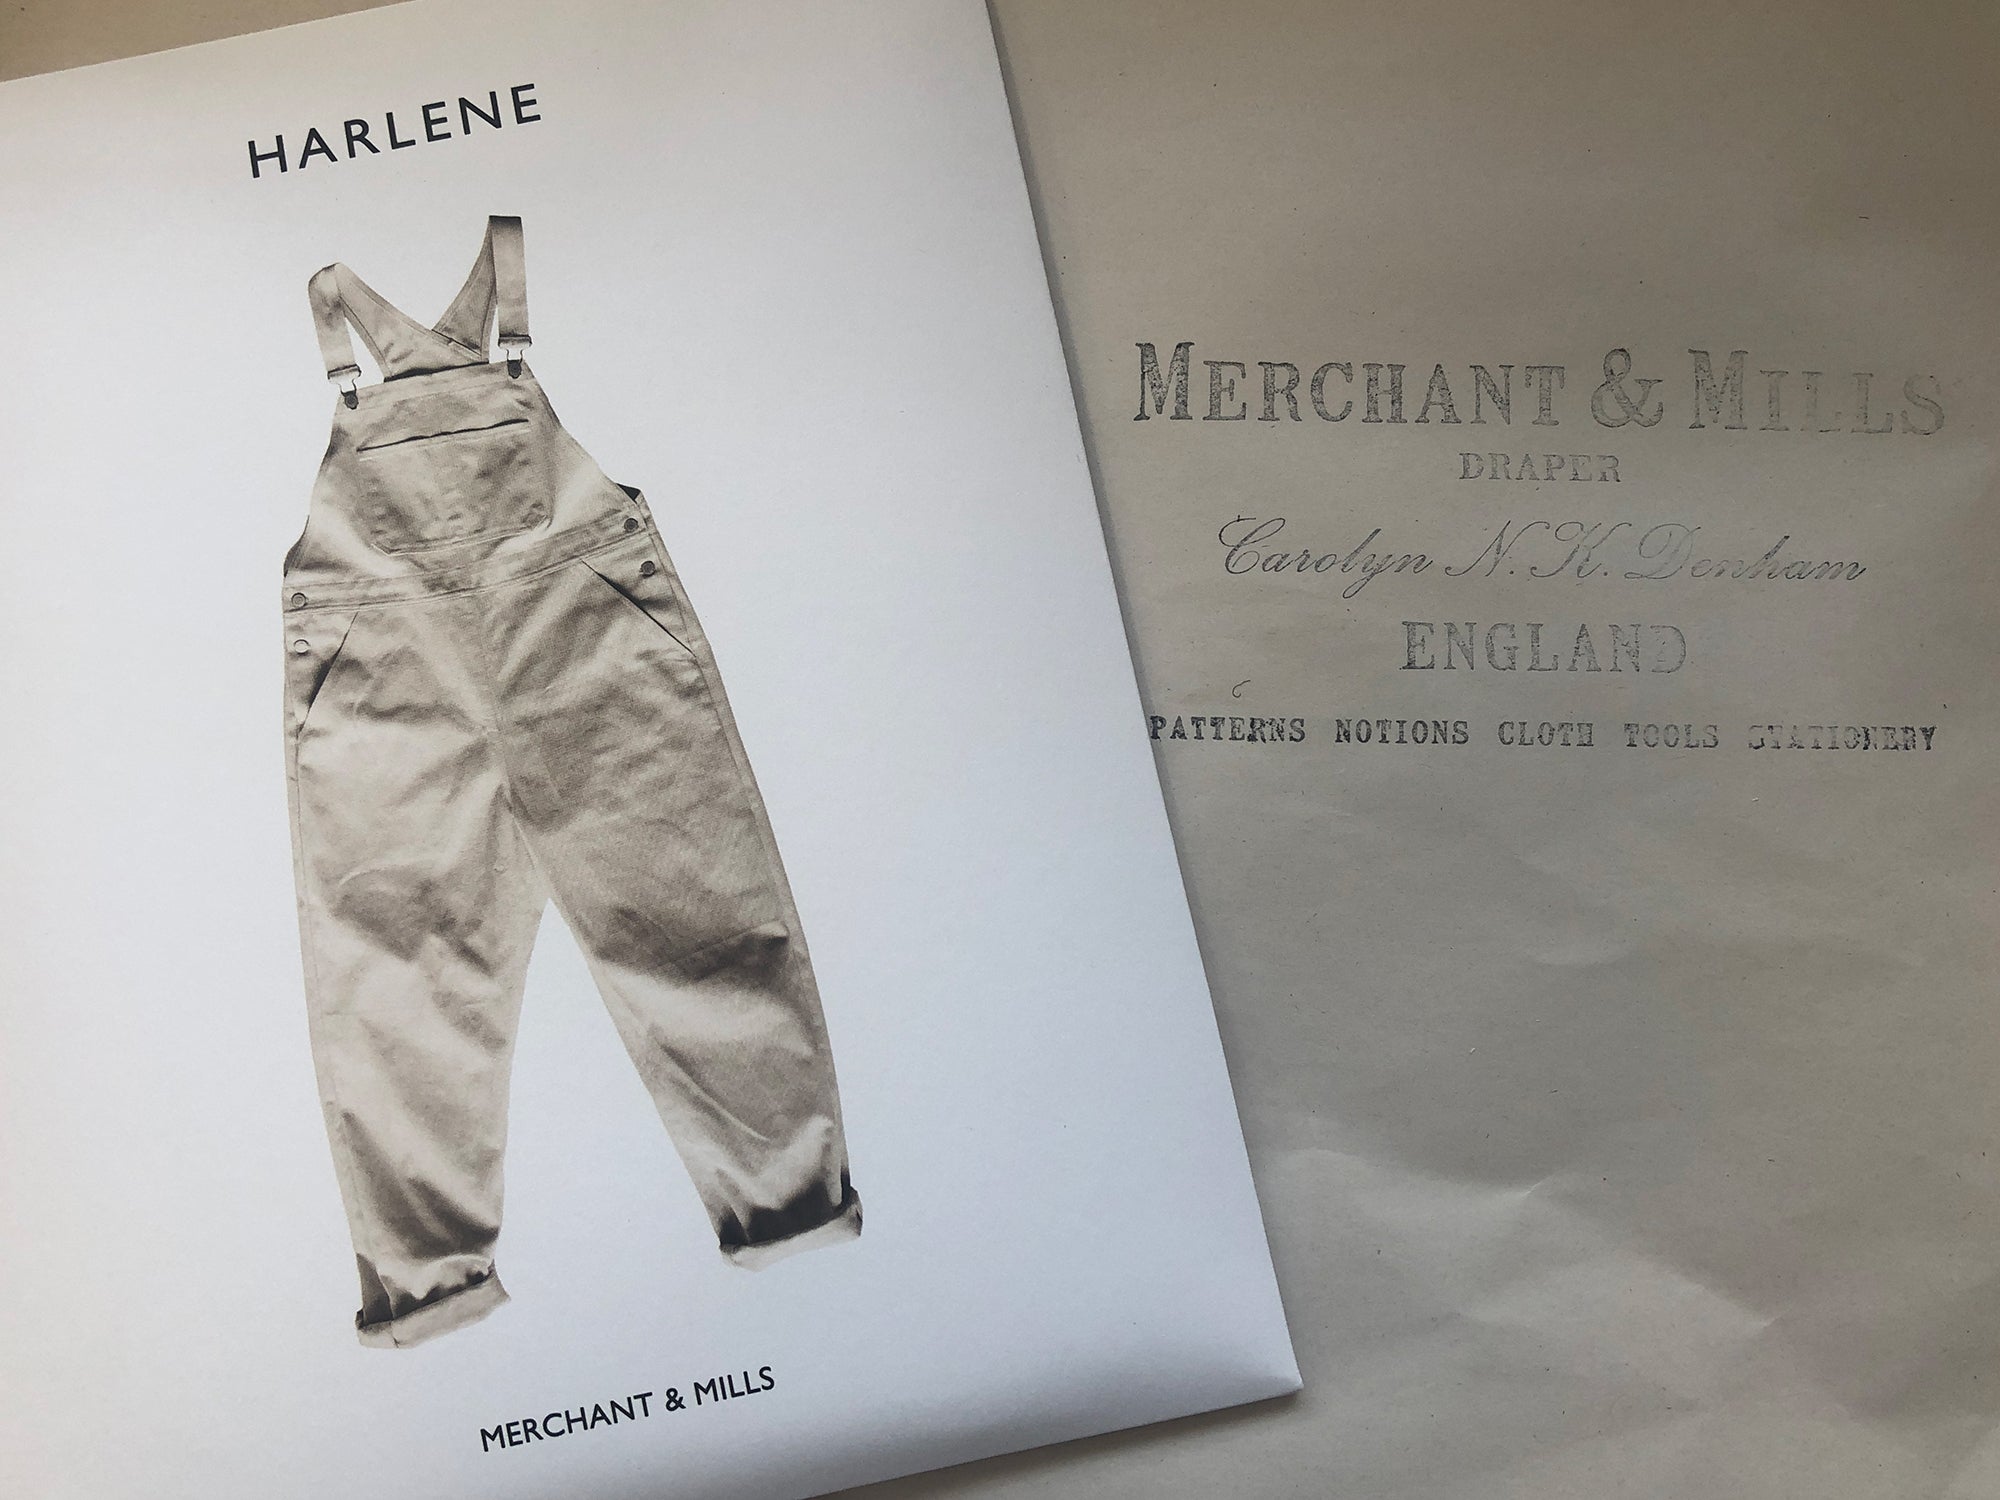 The Harlene: Merchant & Mills pattern